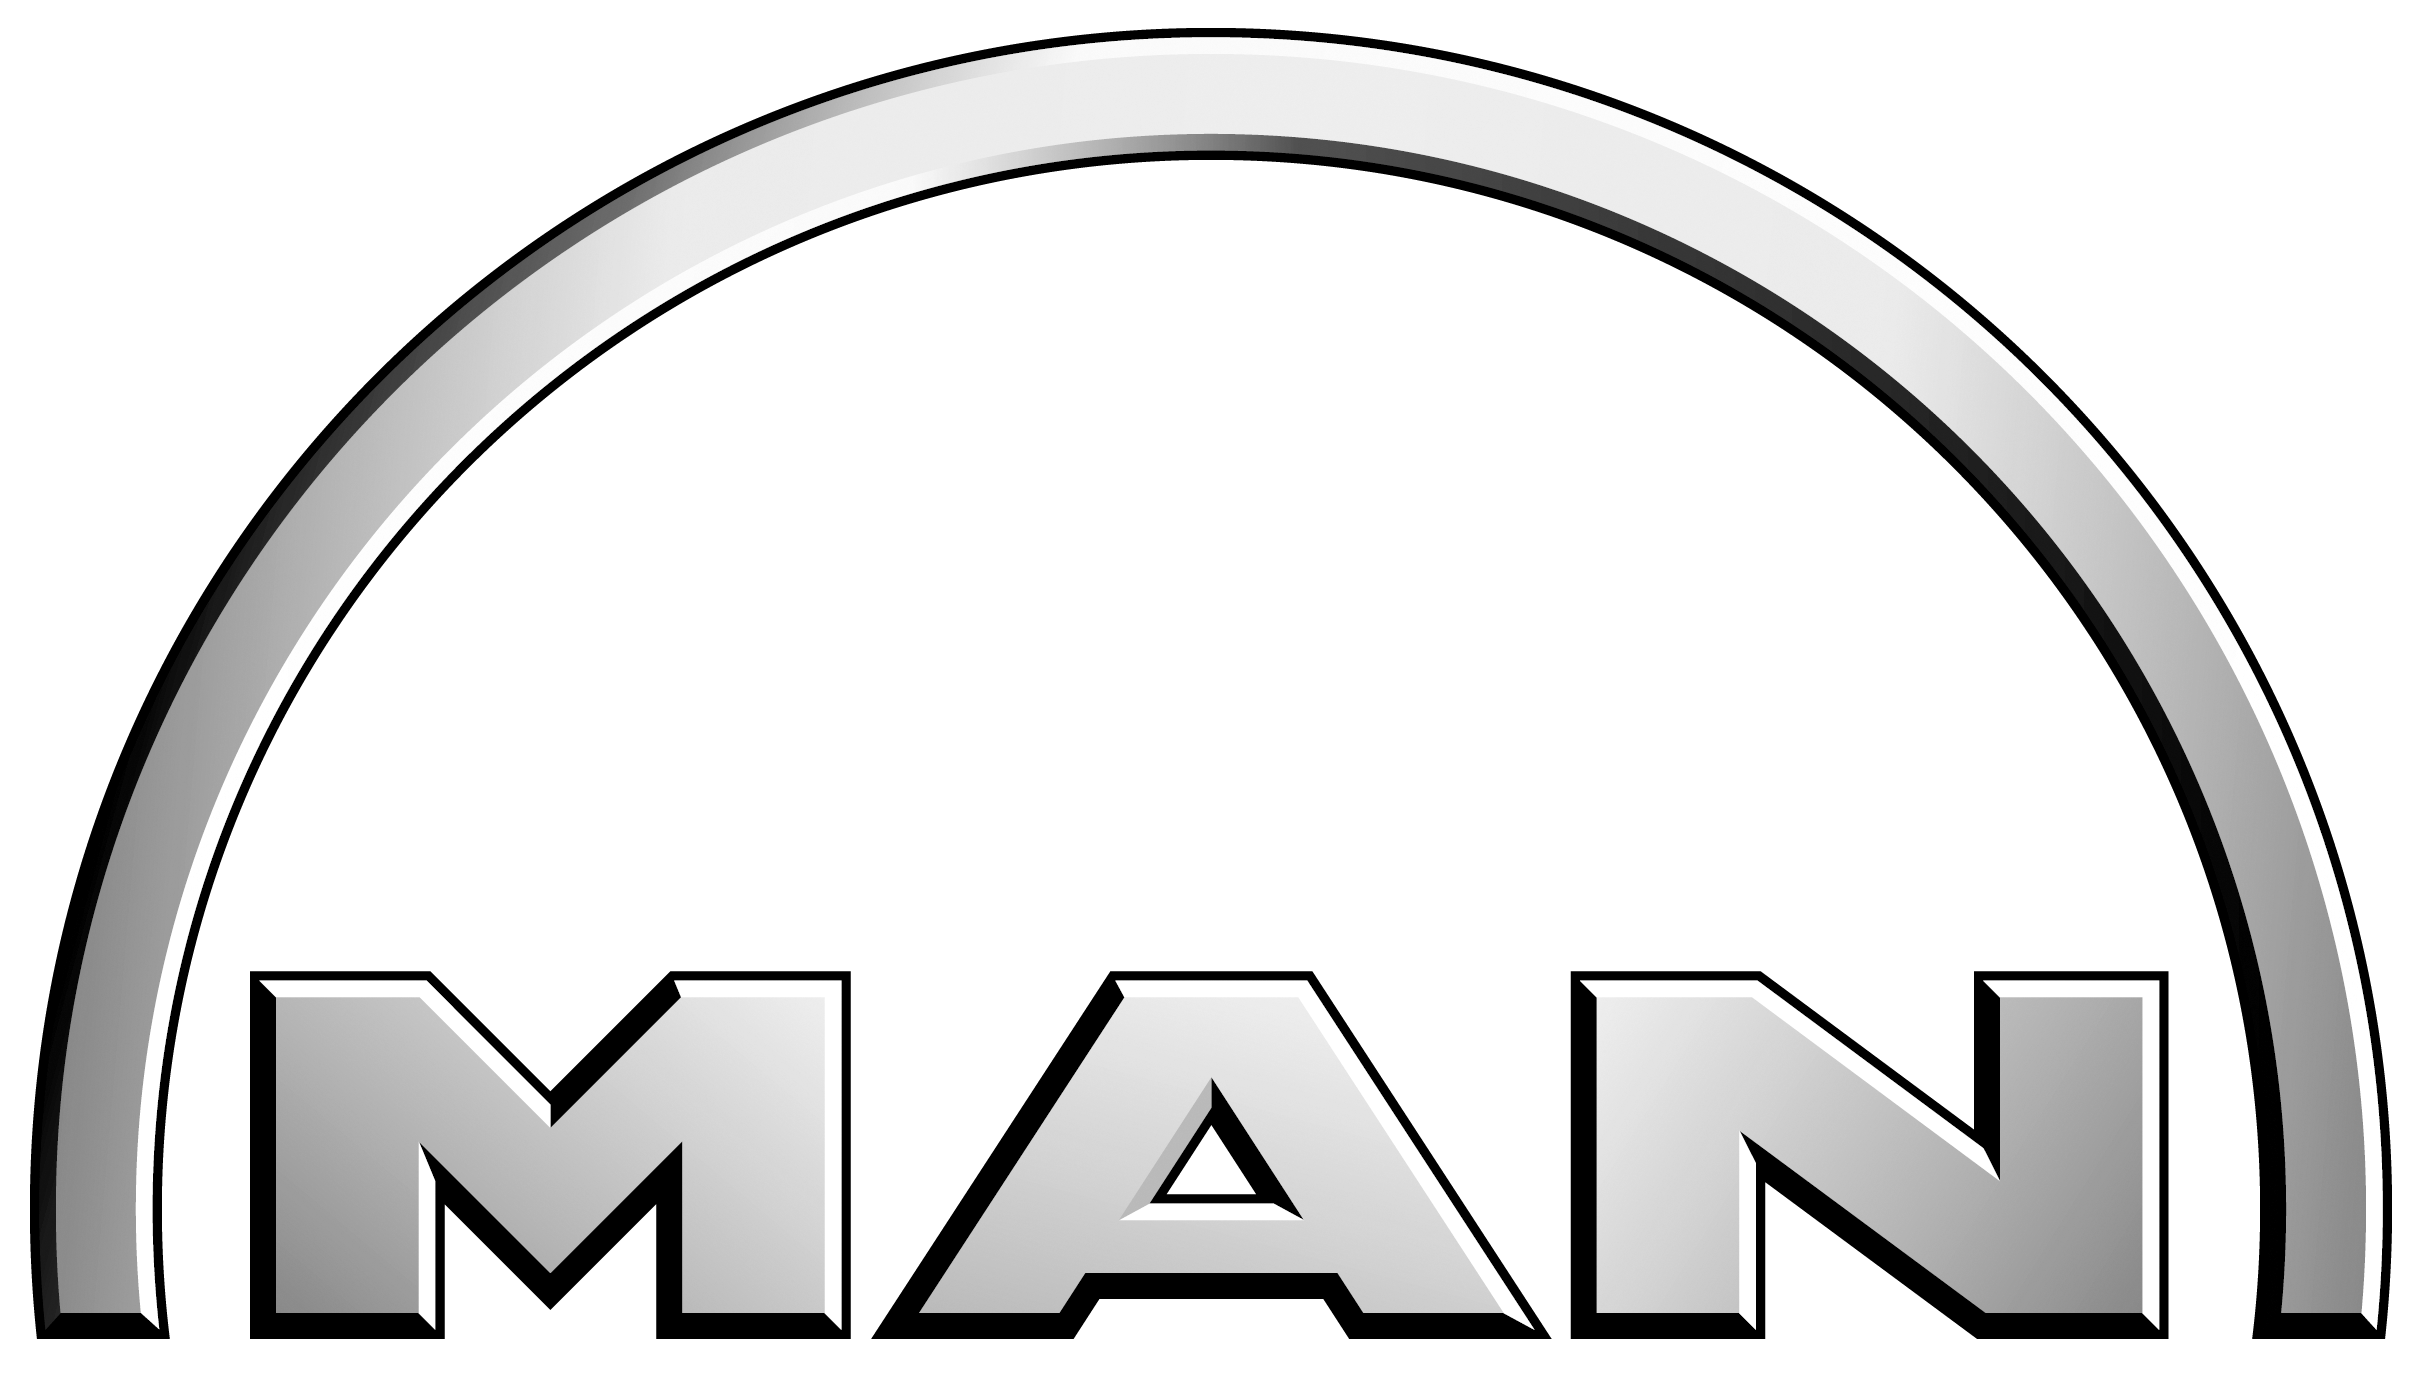 Logo_MAN_pos_RGB